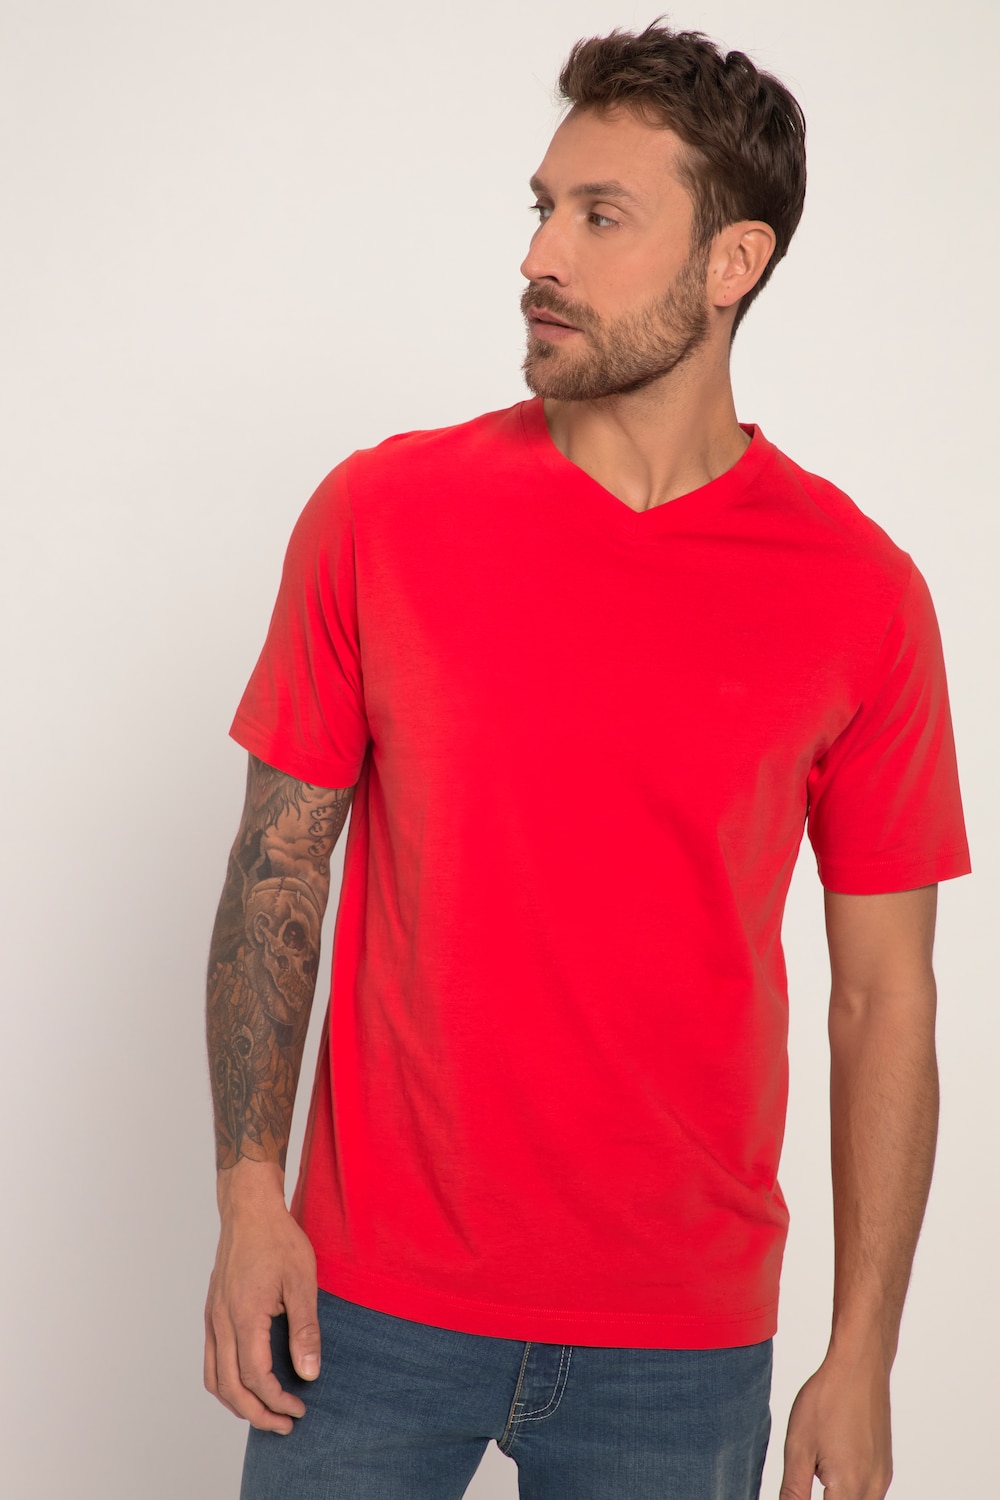 Grote Maten T-shirt, Heren, rood, Maat: 6XL, Katoen/Polyester, JP1880